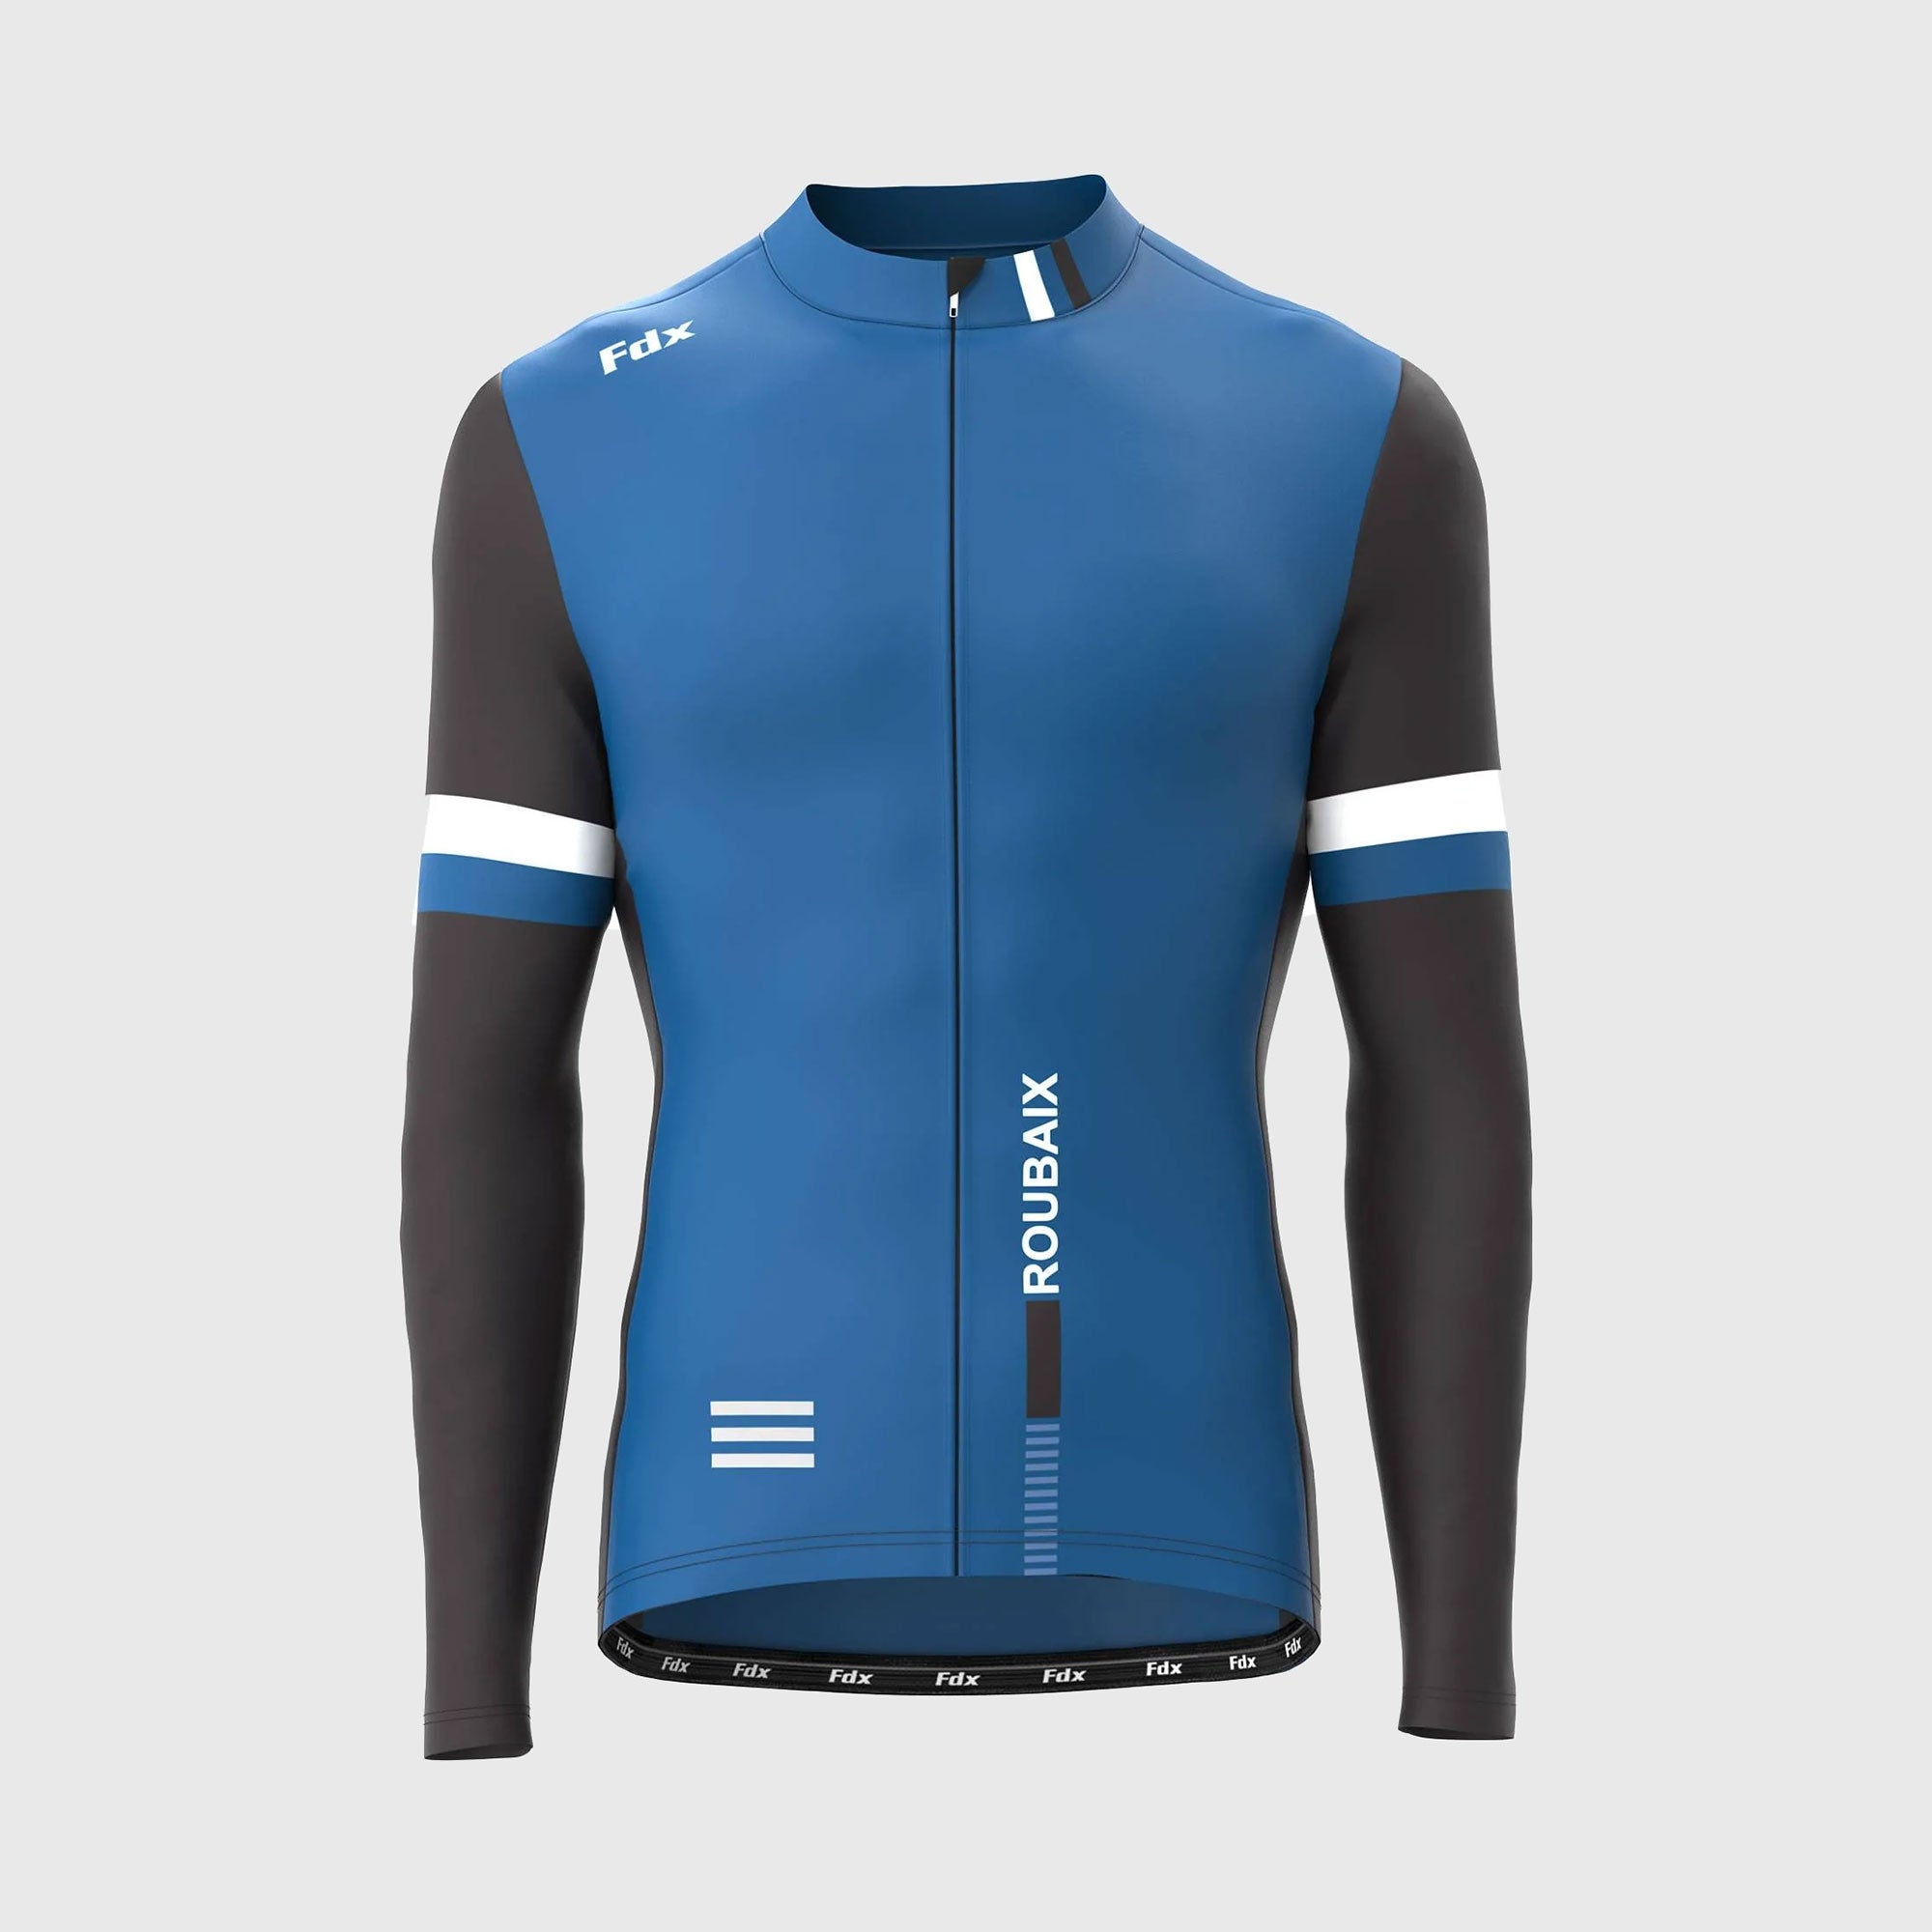 Fdx Men's Black & Blue Long Sleeve Cycling Jersey for Winter Roubaix Thermal Fleece Road Bike Wear Top Full Zipper, Pockets & Hi viz Reflectors - Limited Edition